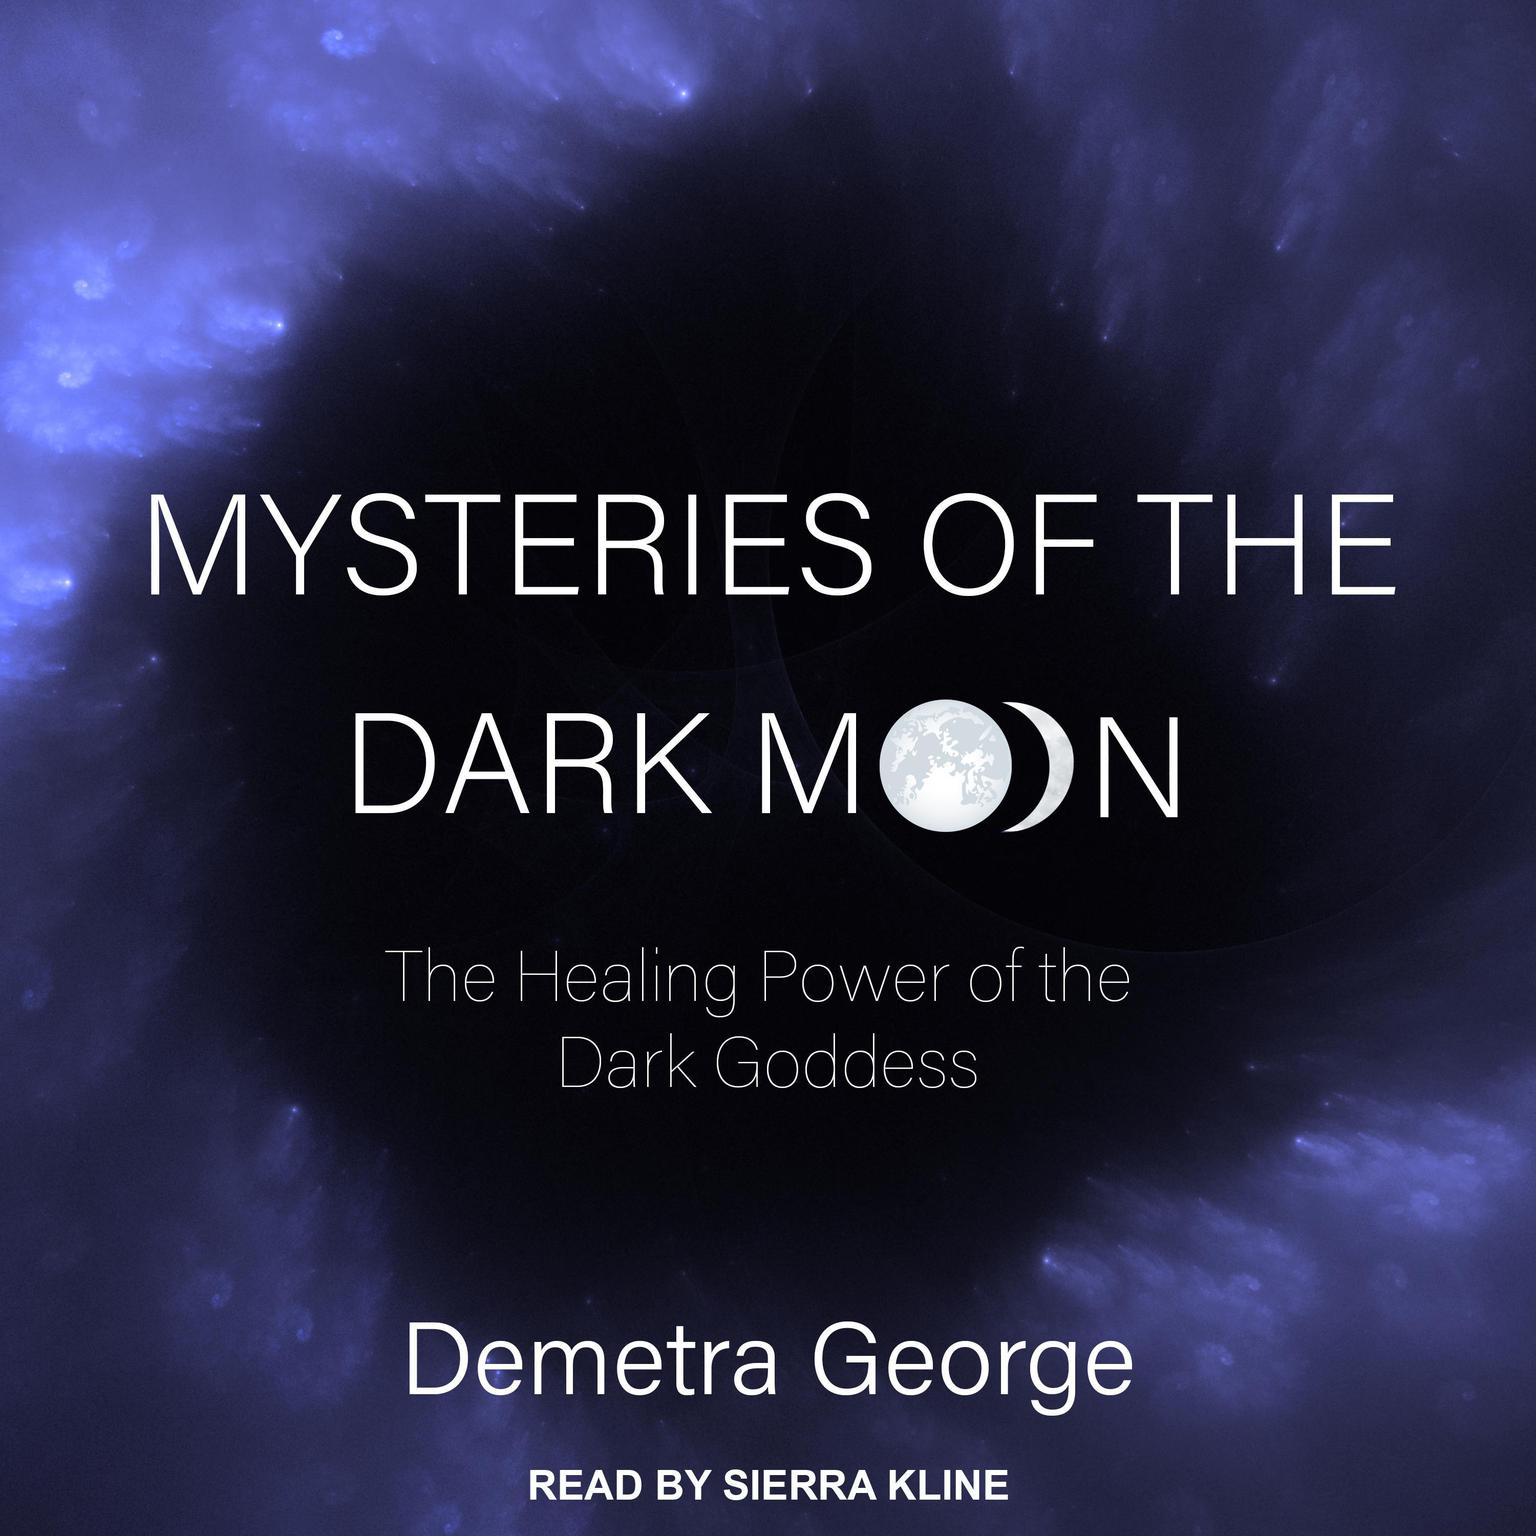 Mysteries of the Dark Moon: The Healing Power of the Dark Goddess Audiobook, by Demetra George